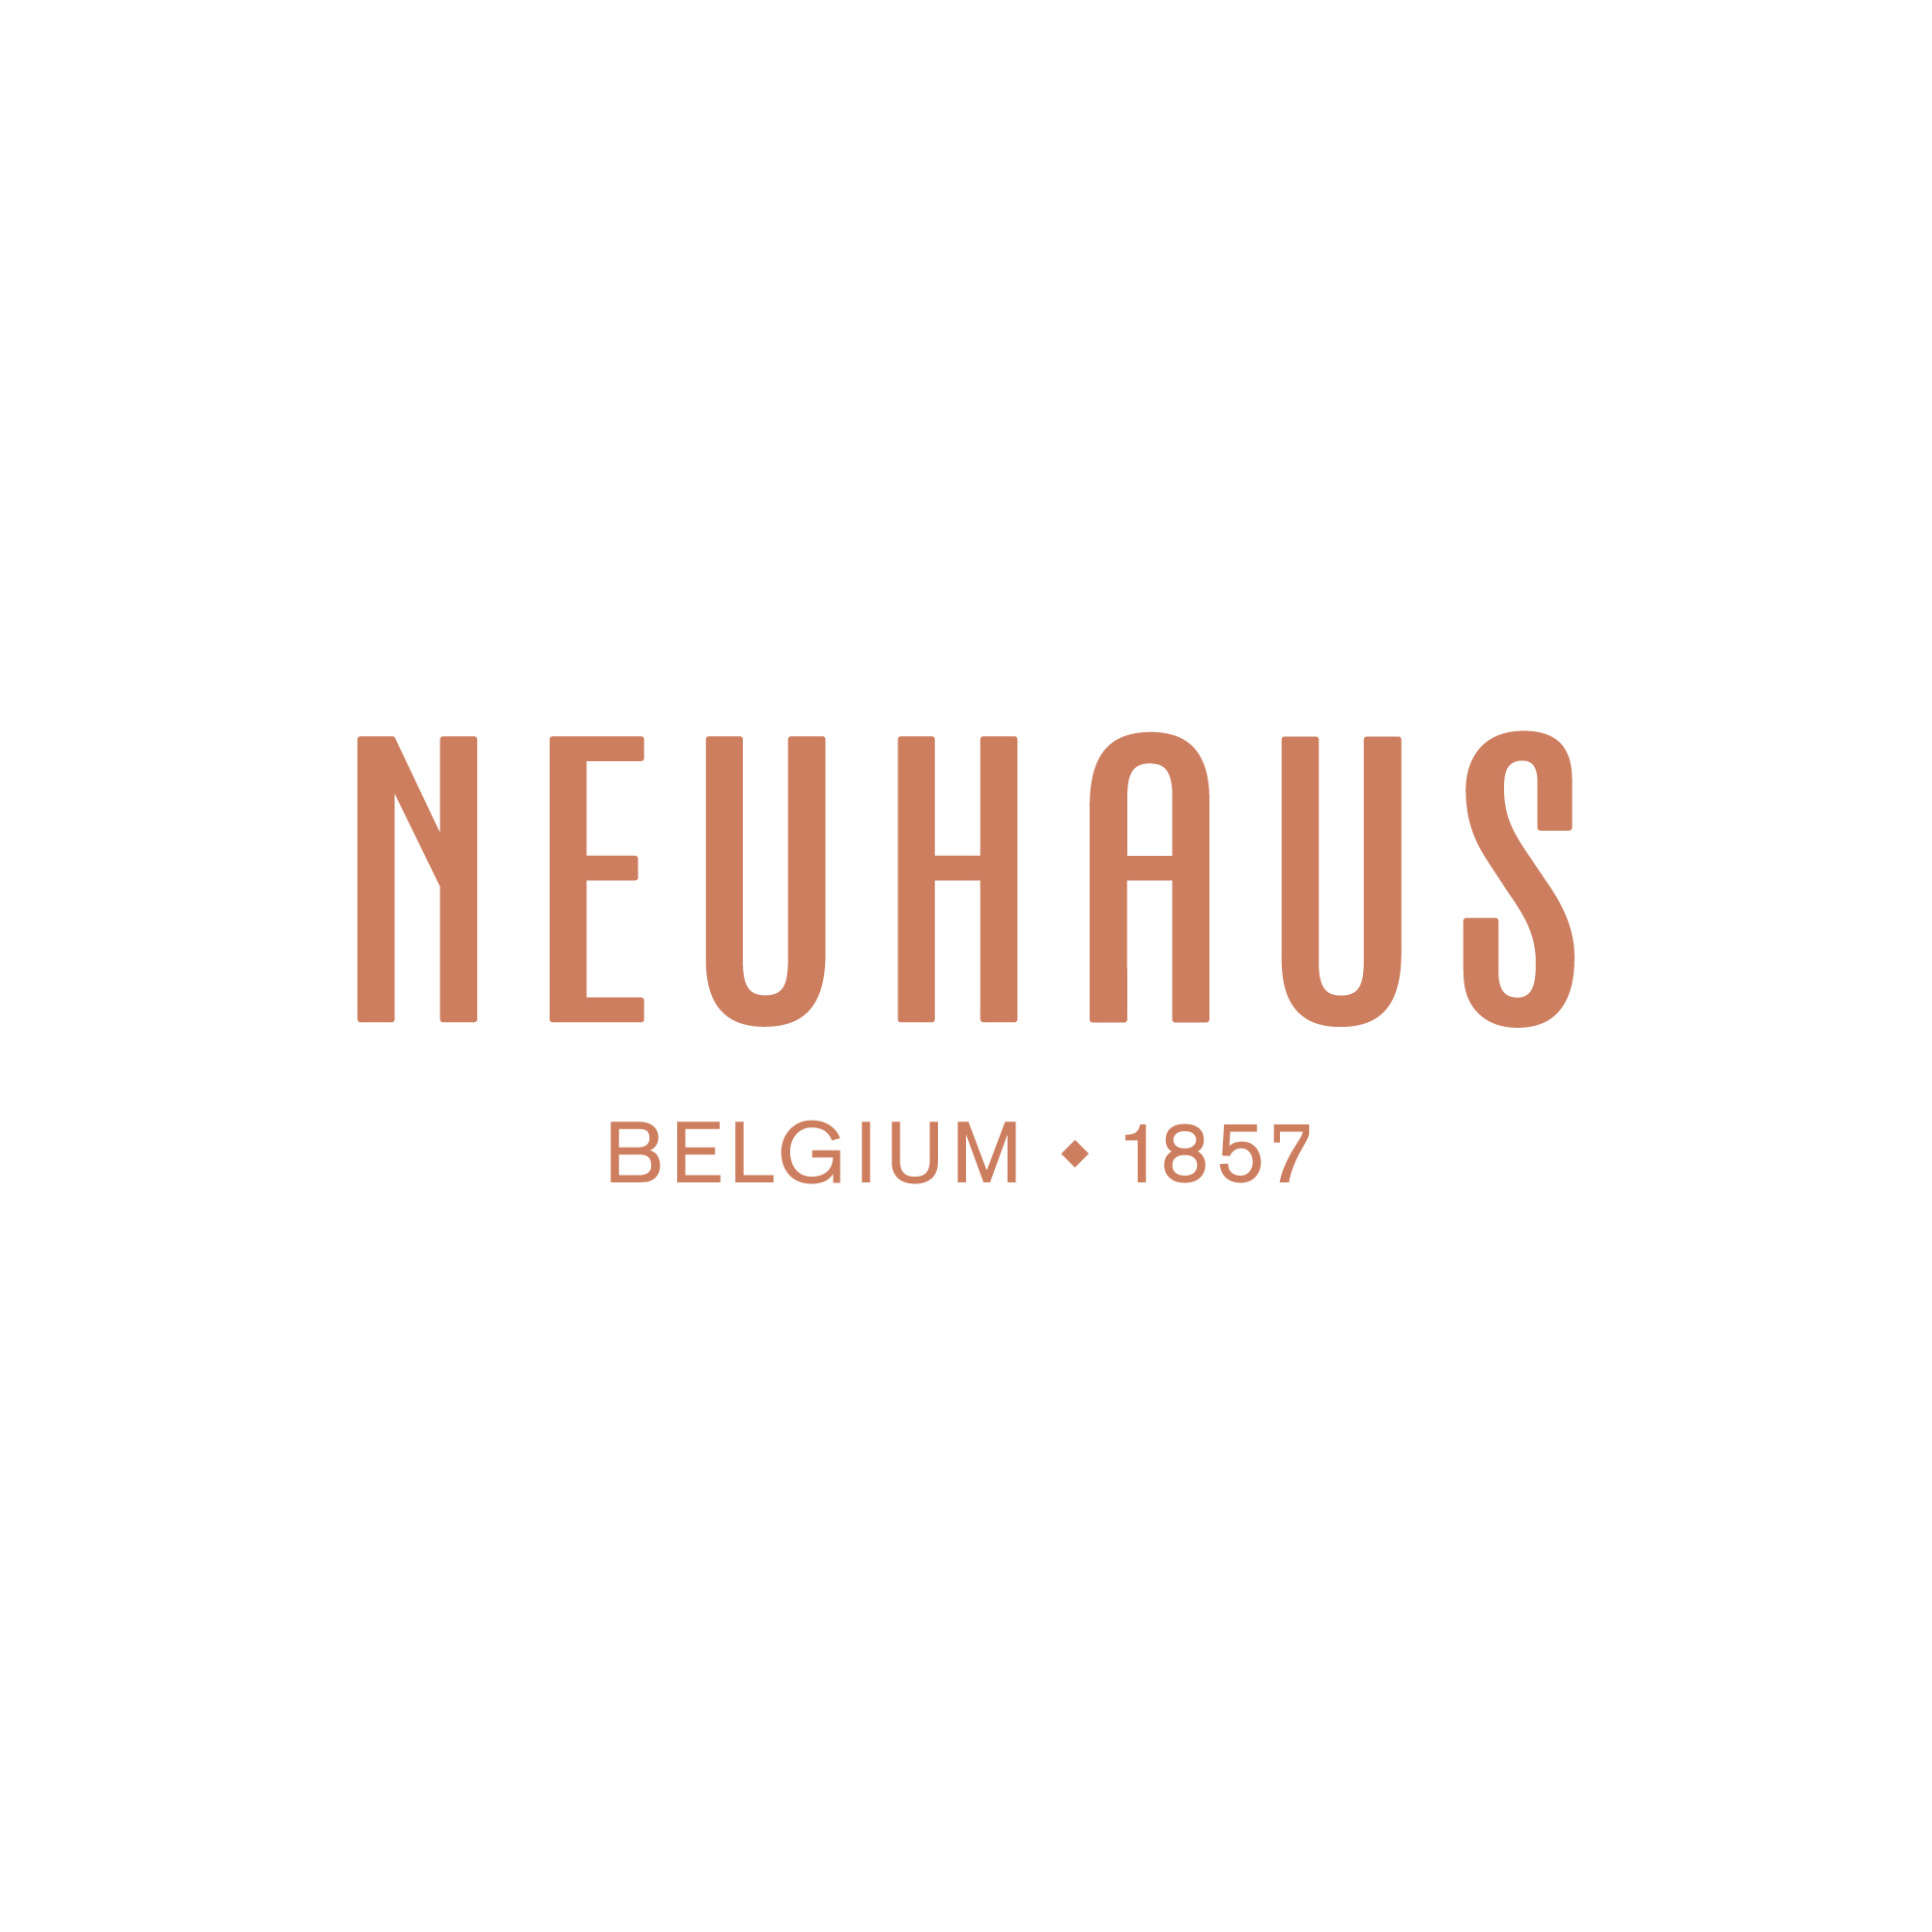 Neuhaus_logo